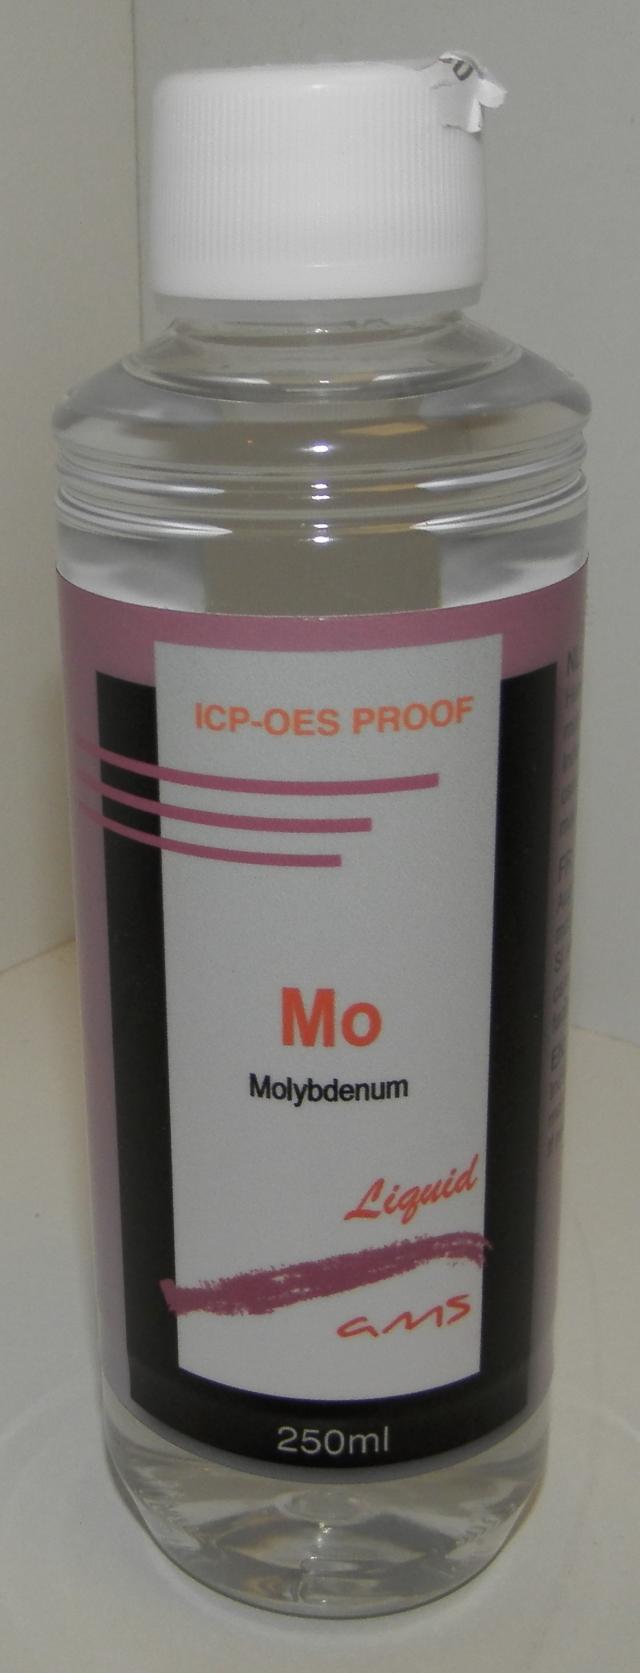 Molybdenum 250ml